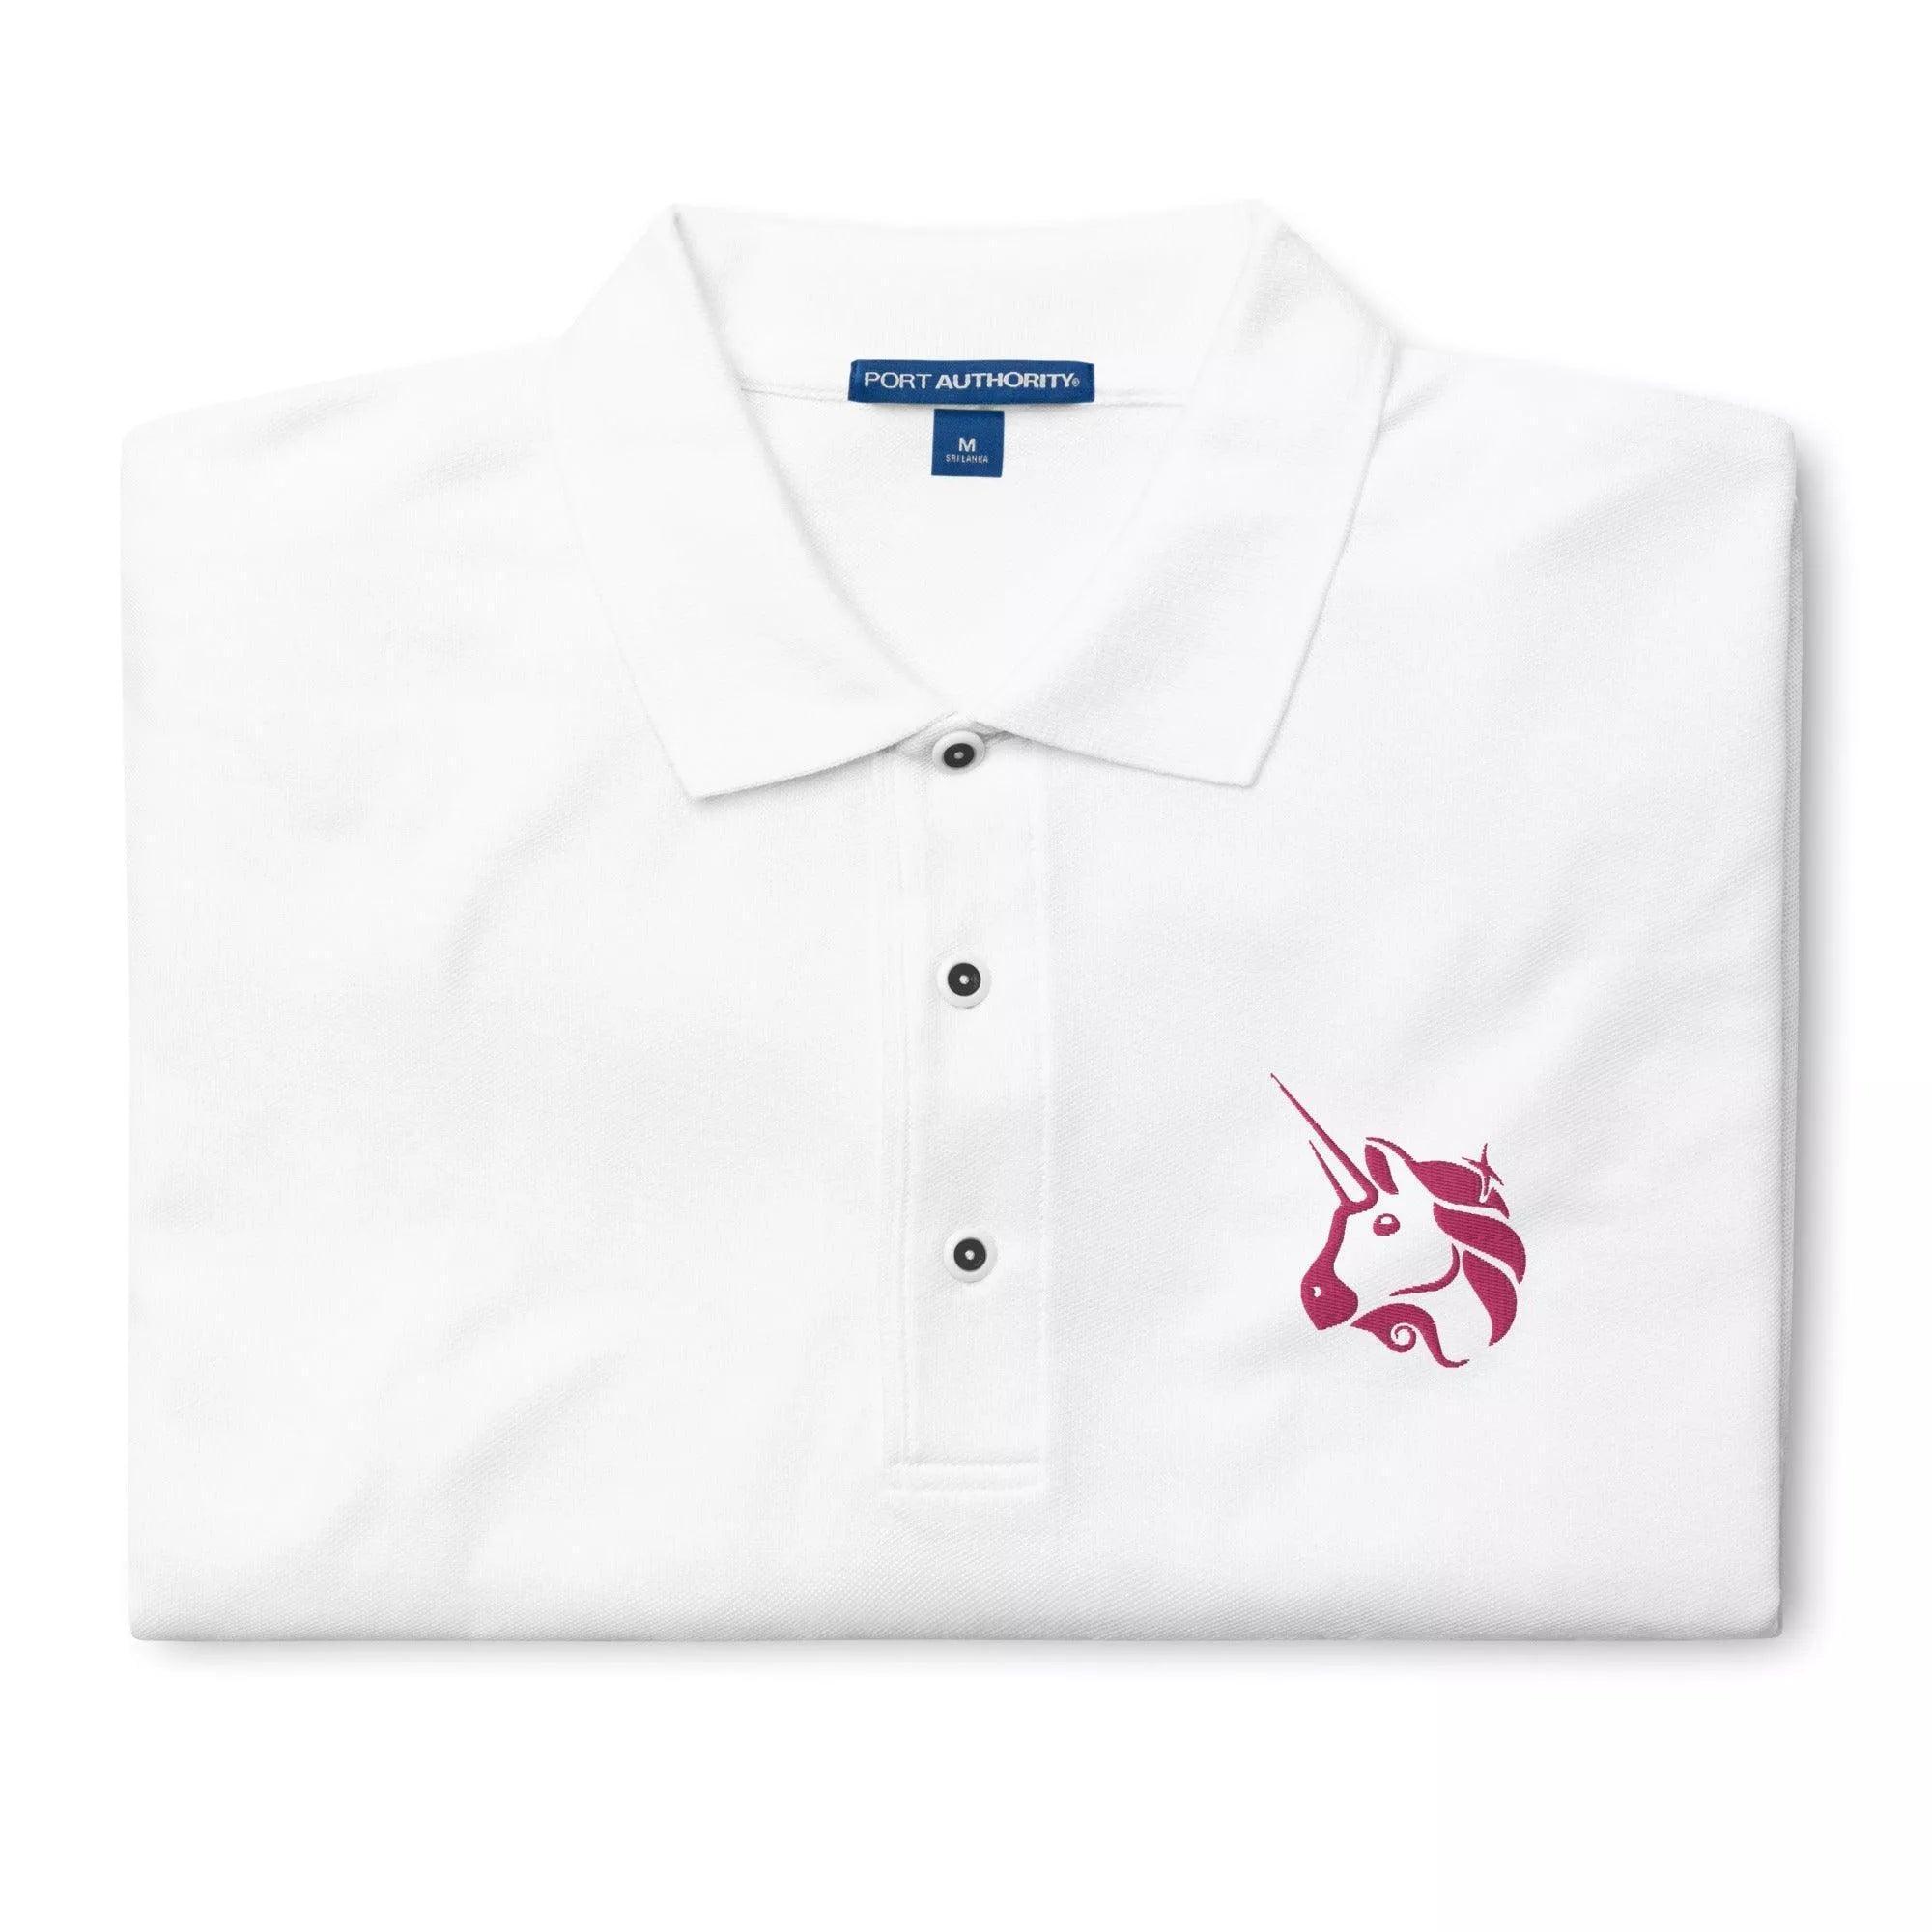 Uniswap Polo Shirt - InvestmenTees